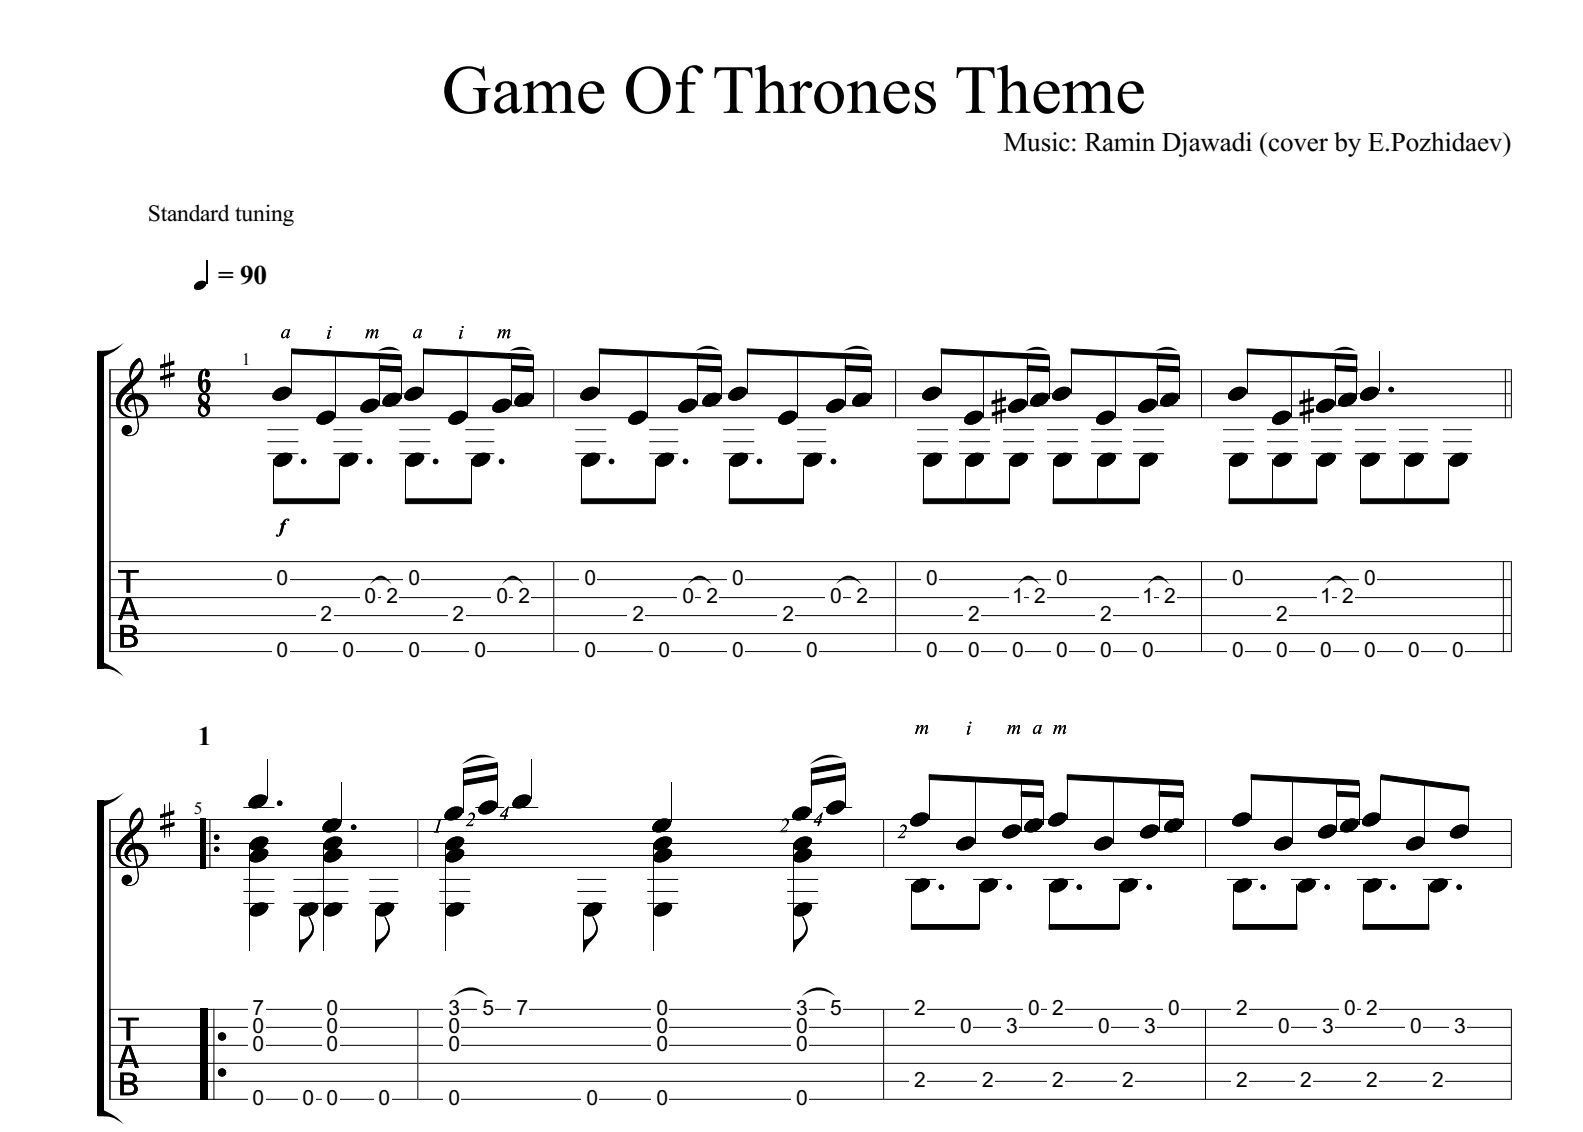 Theme Game of thrones tab 1  Guitar tabs songs, Guitar lessons songs,  Guitar chords